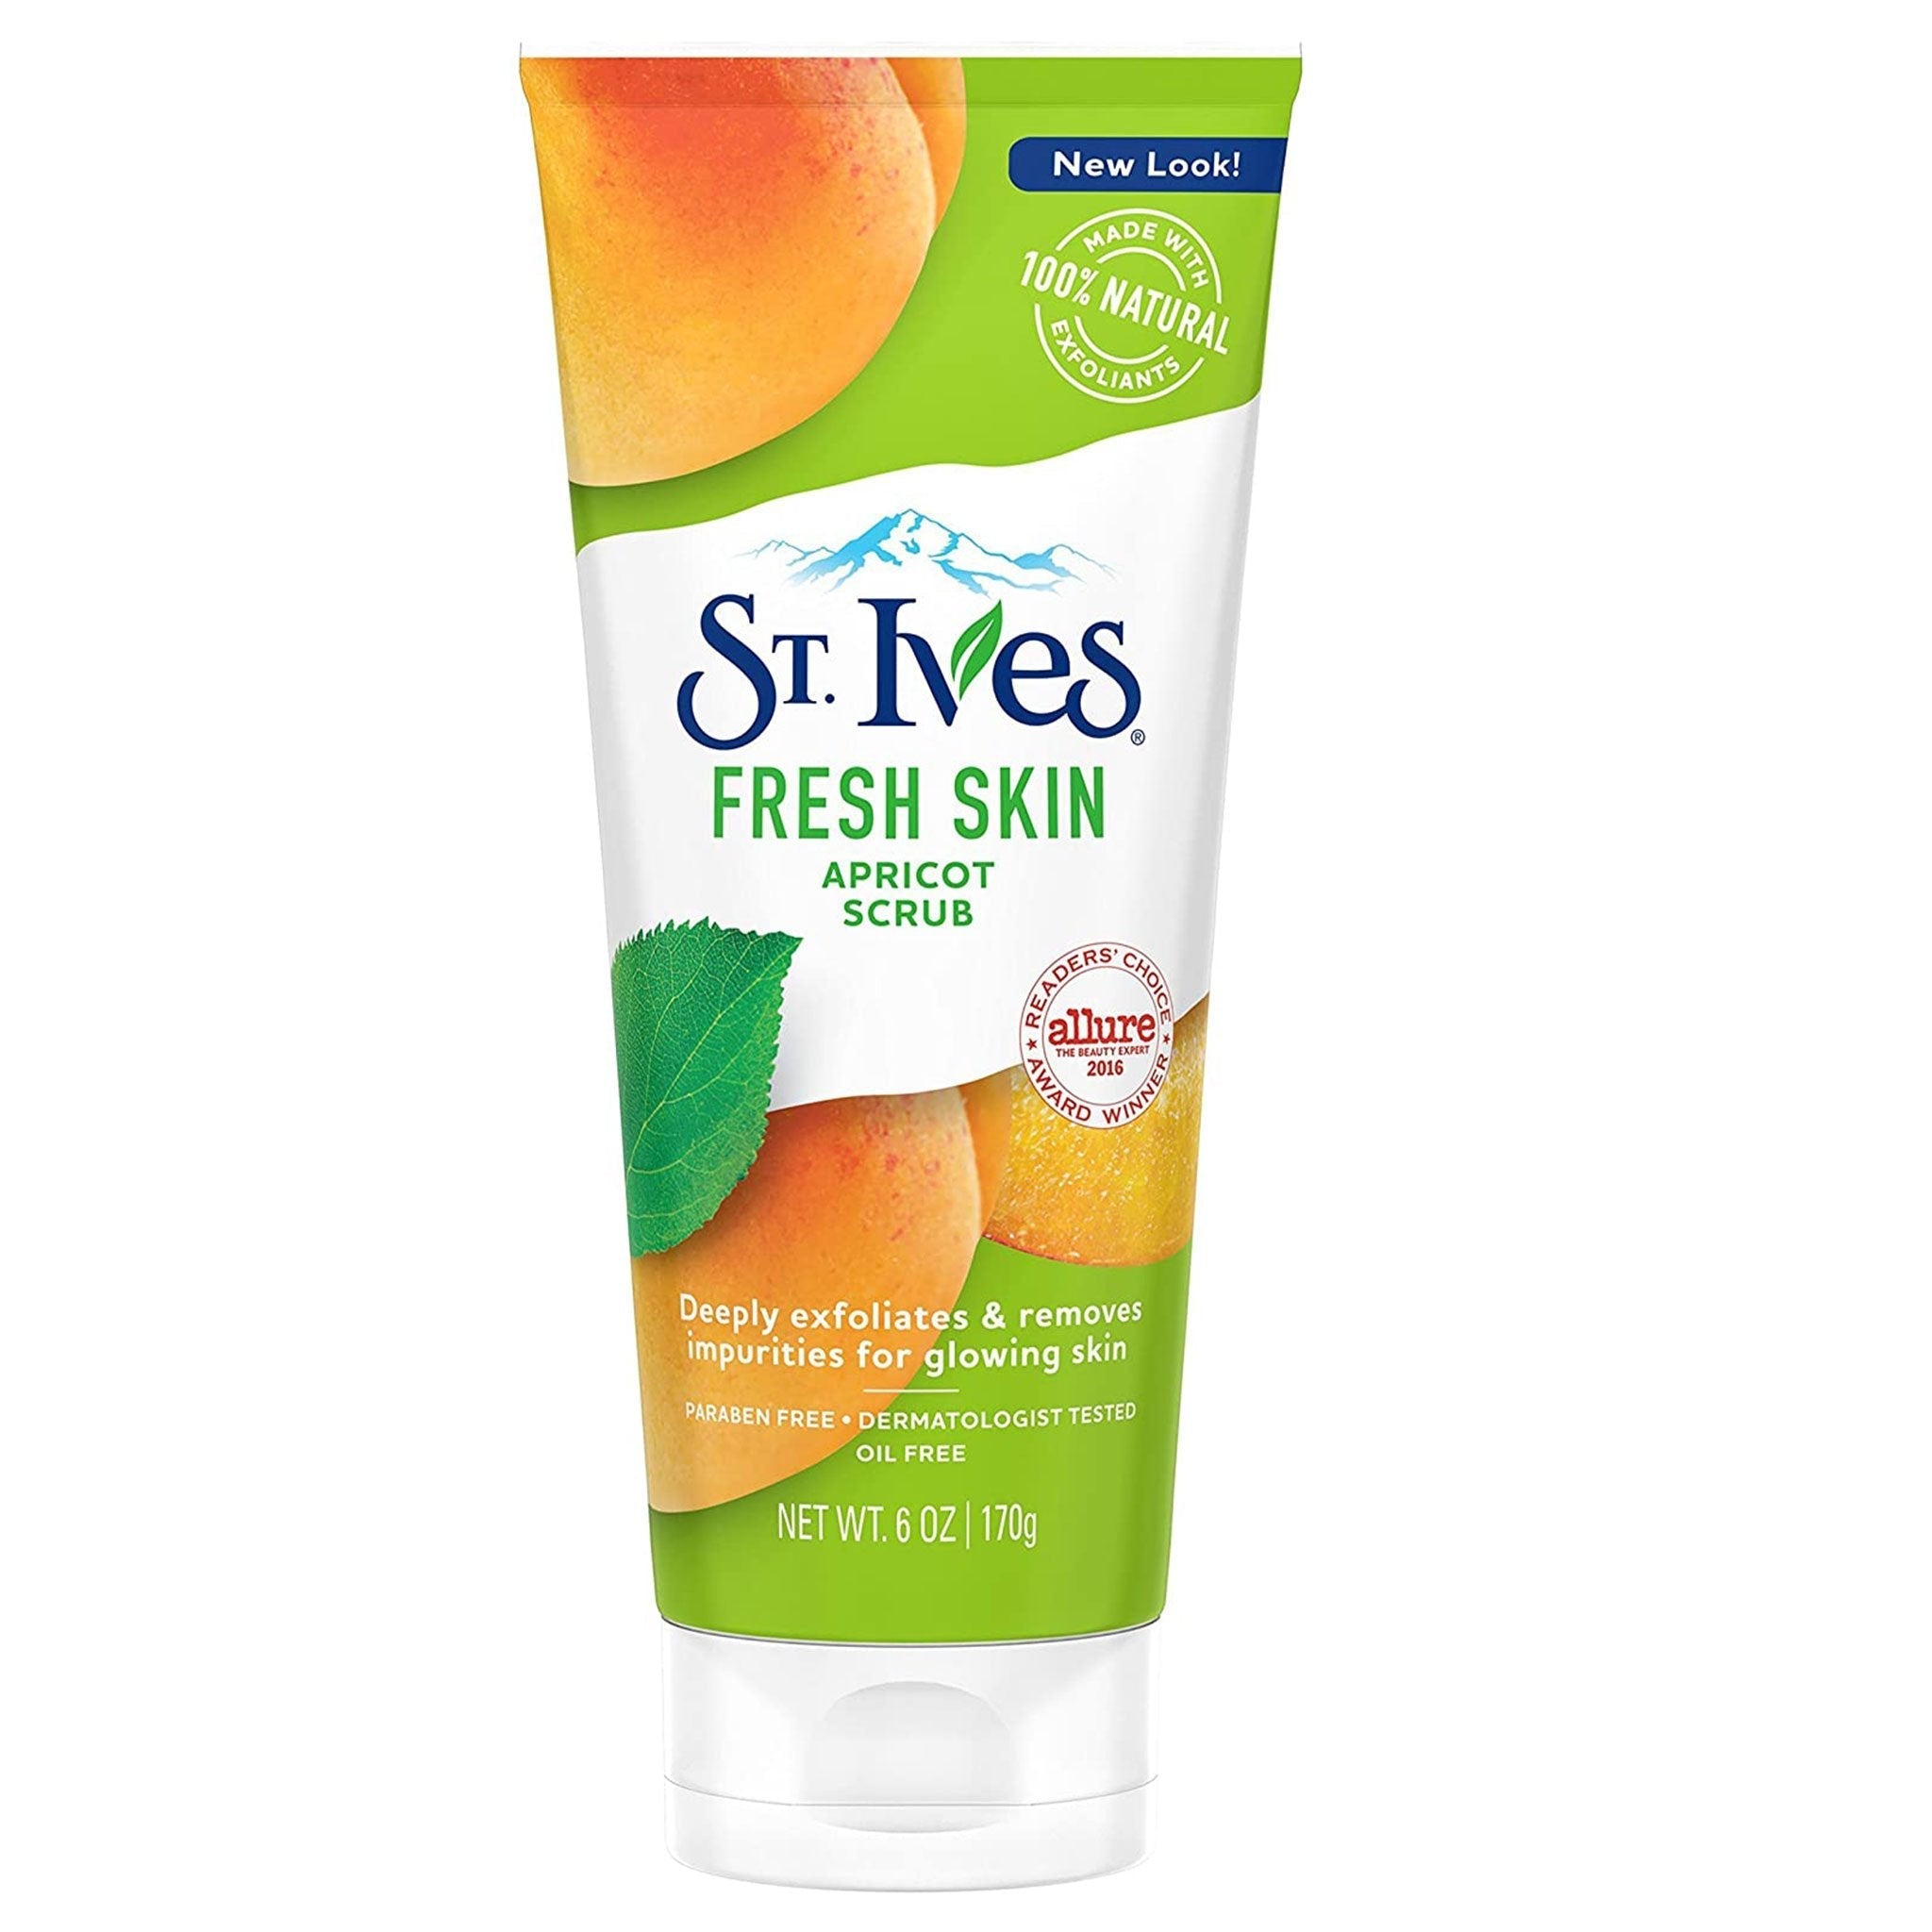 St Ives Fresh Skin Apricot Scrub 6 oz 170g